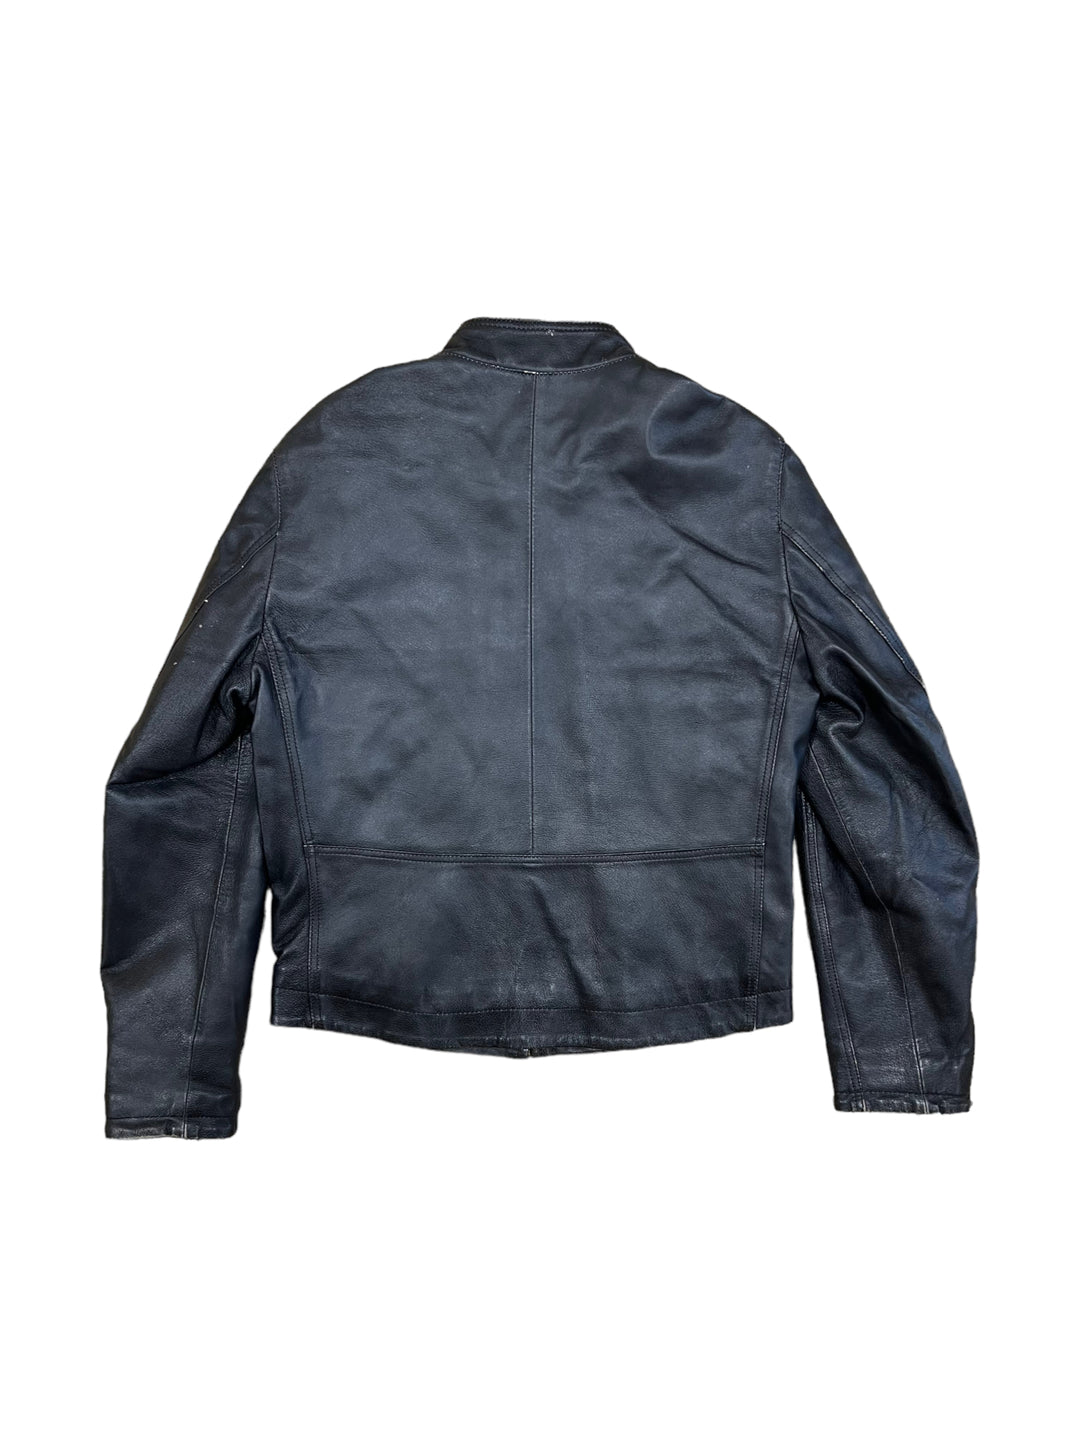 Vintage Leather Jacket Men’s Medium